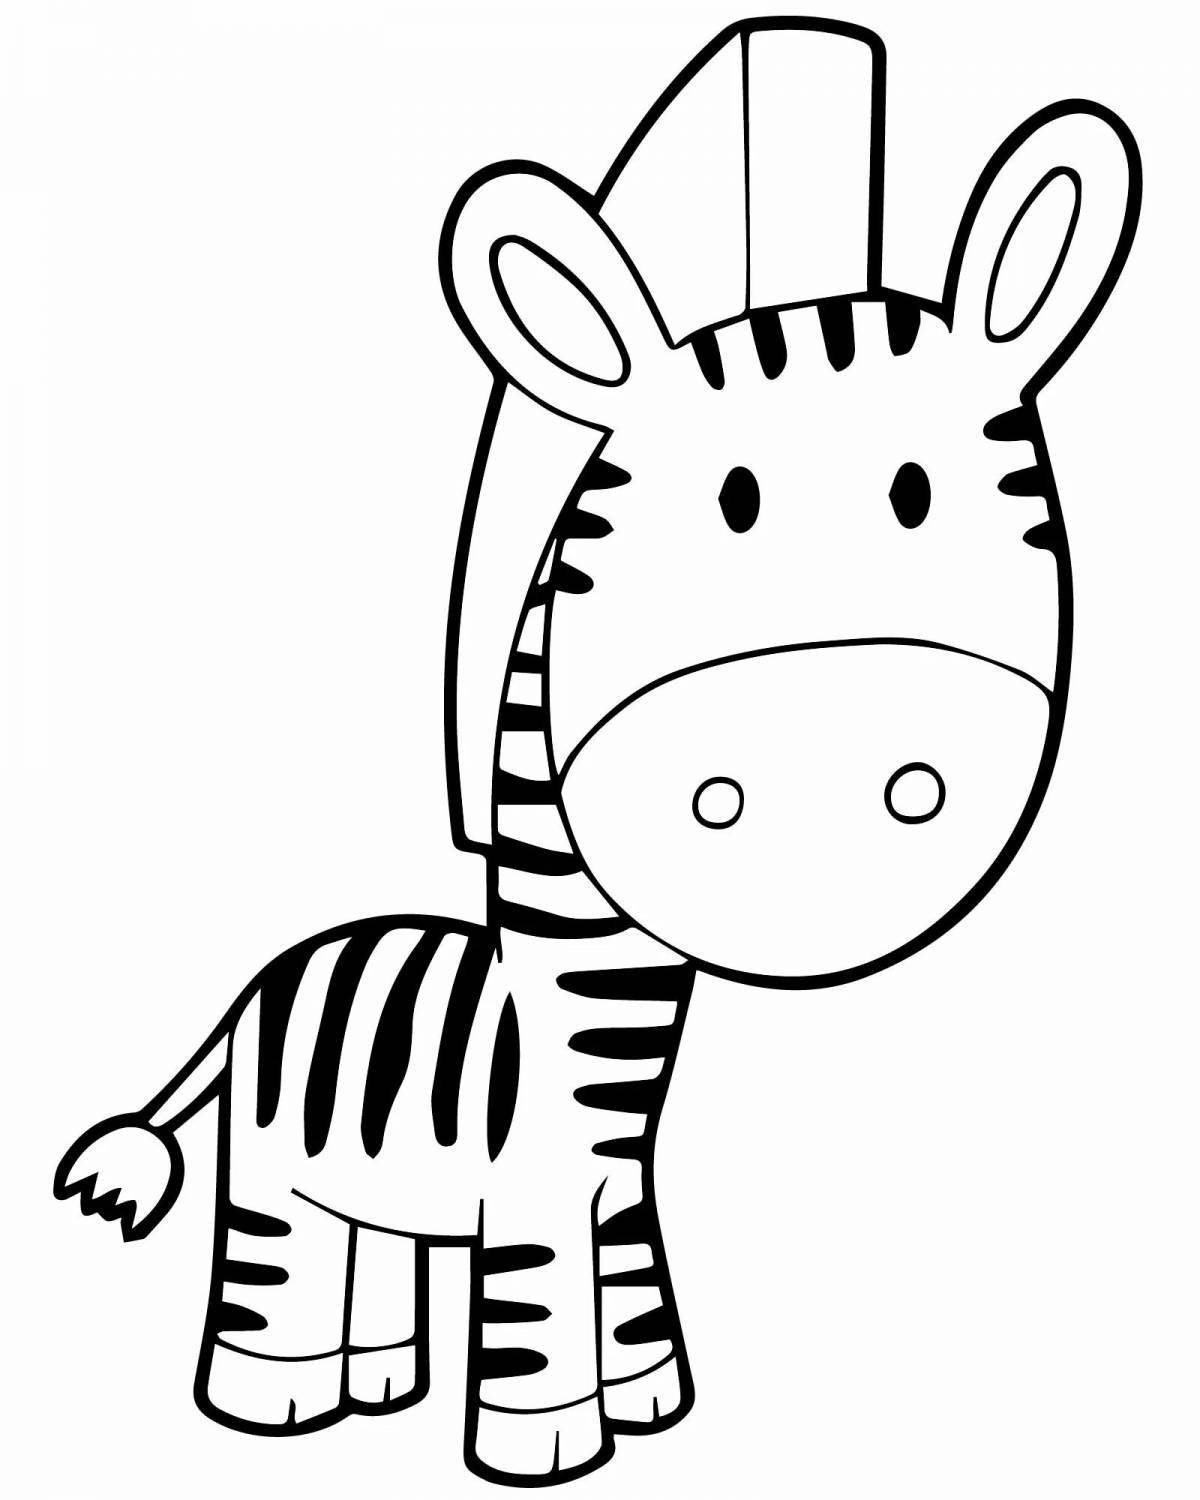 Потрясающий рисунок зебры